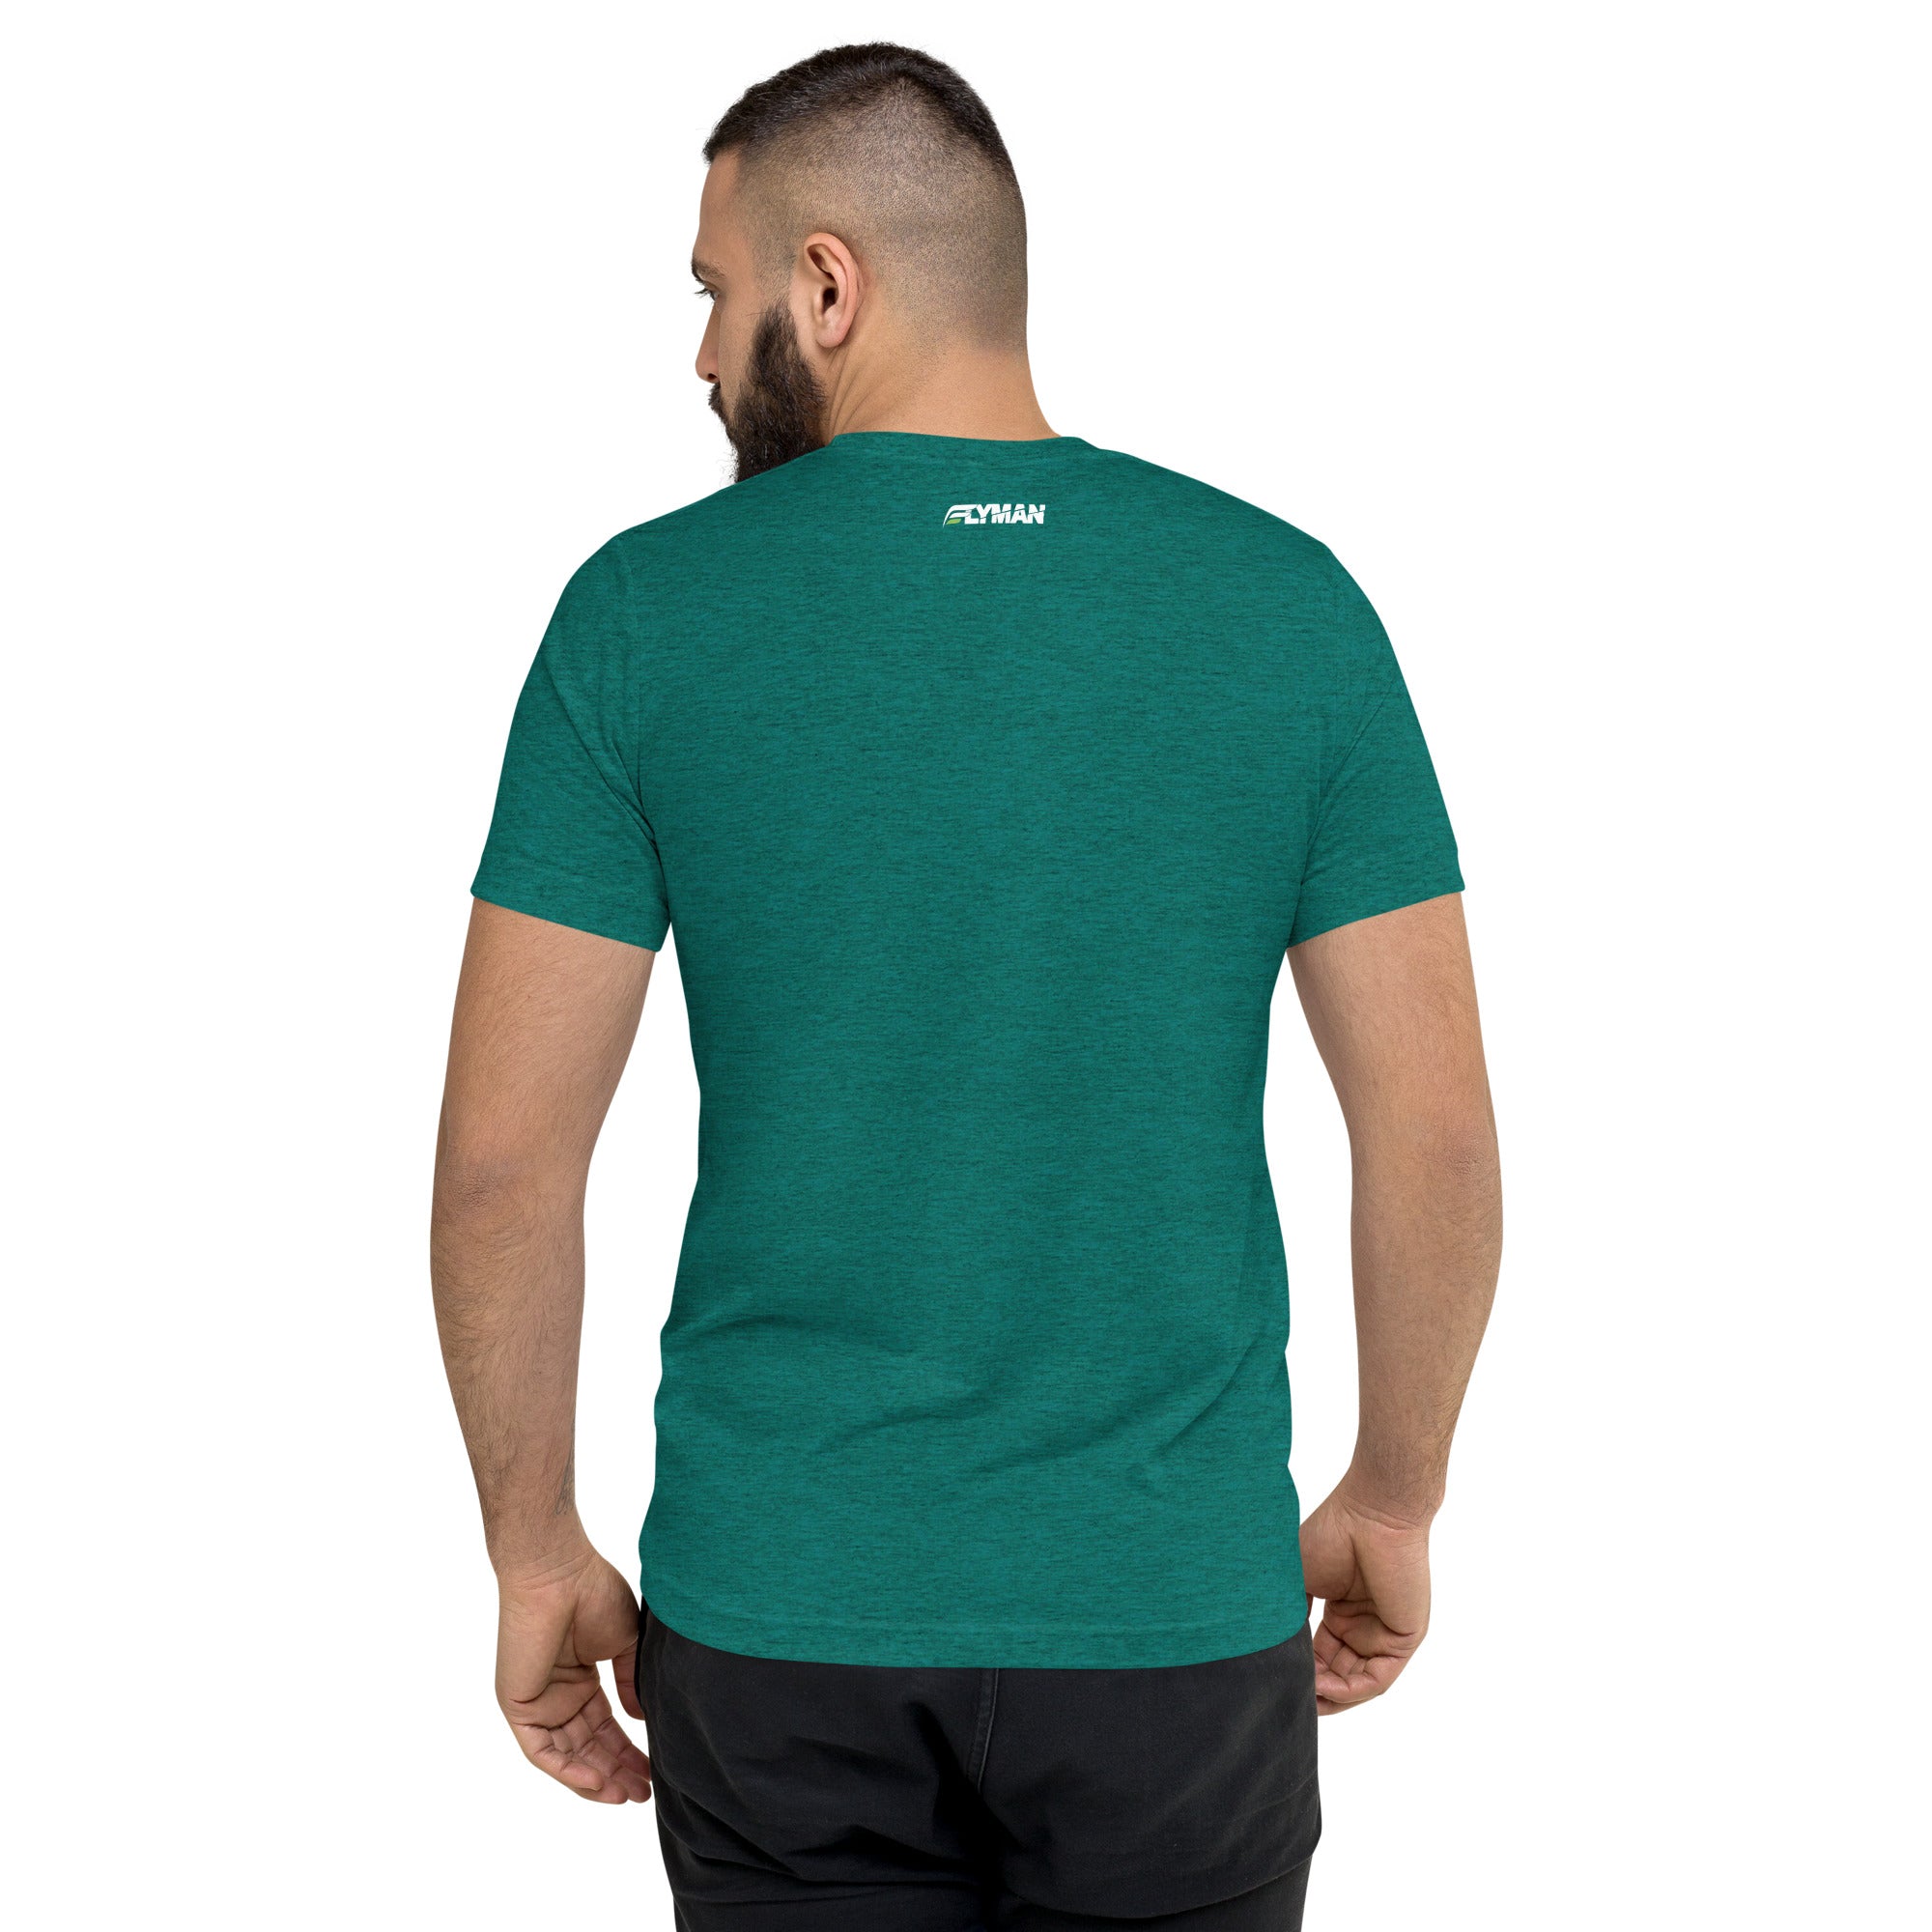 Flyman Men's Short sleeve t-shirt